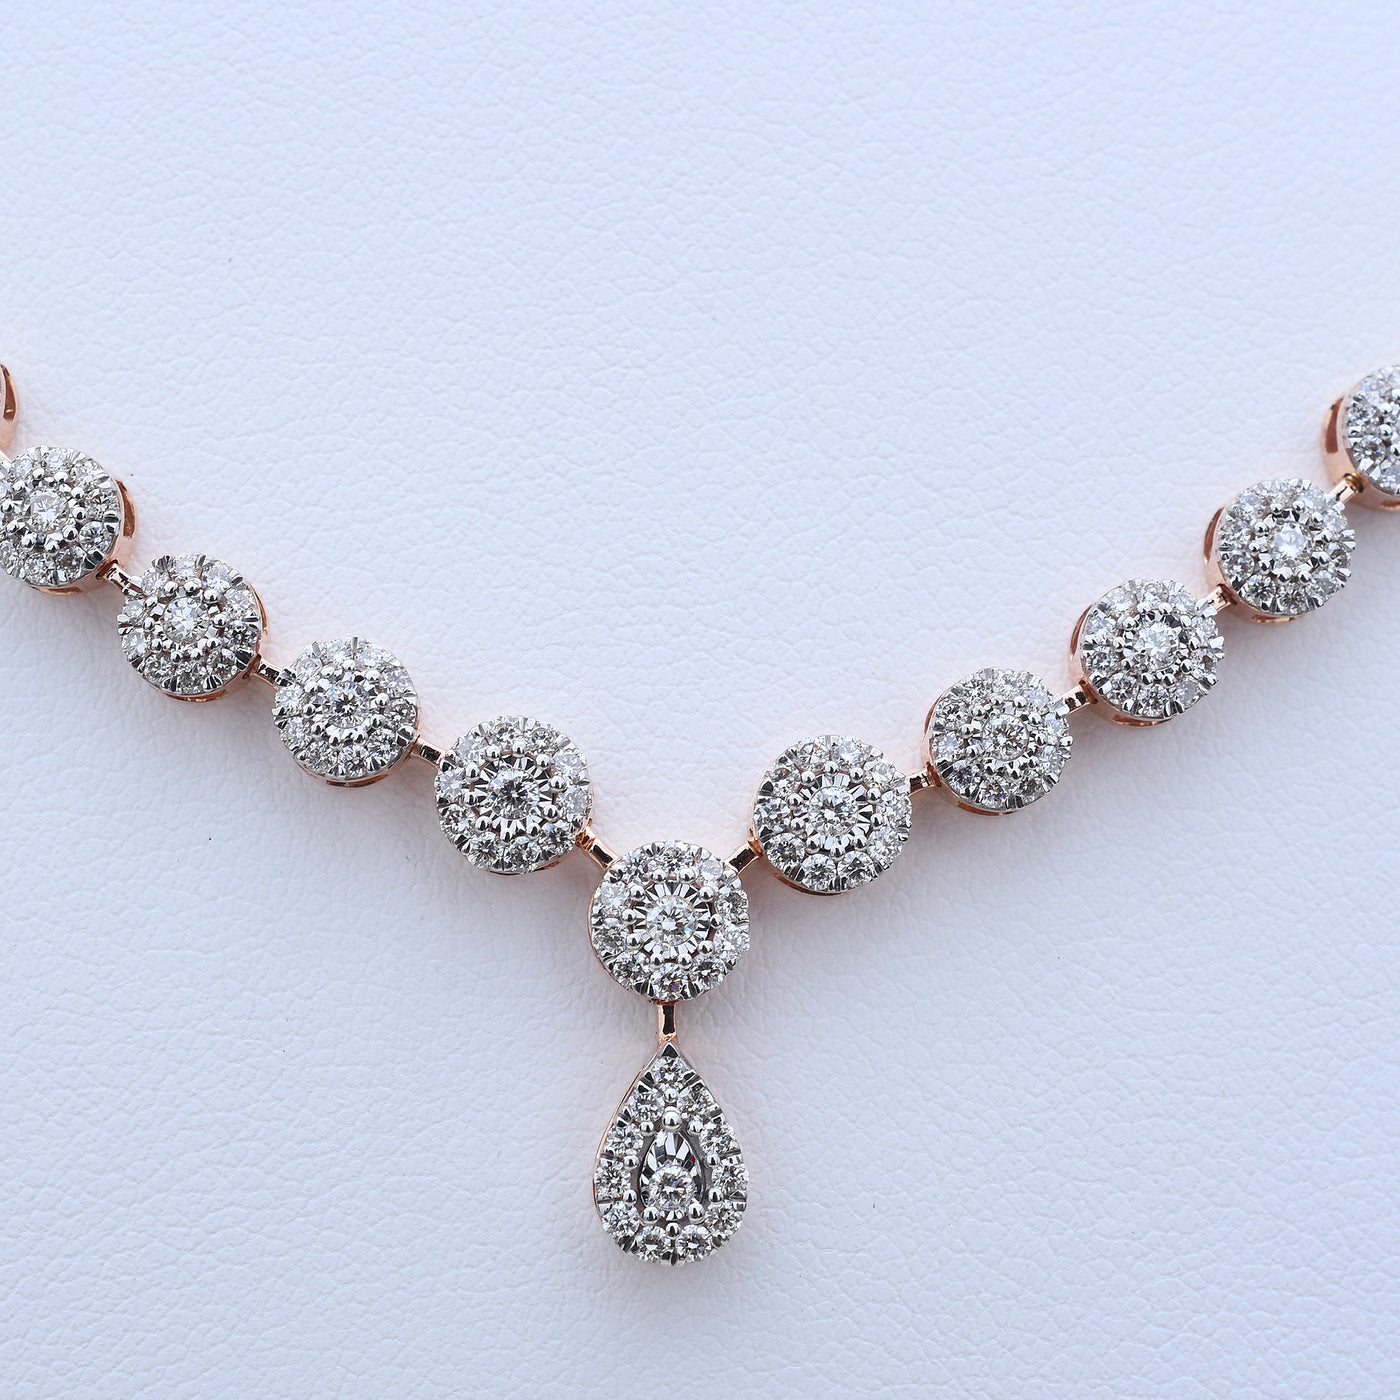 The Emily Diamond Necklace Set